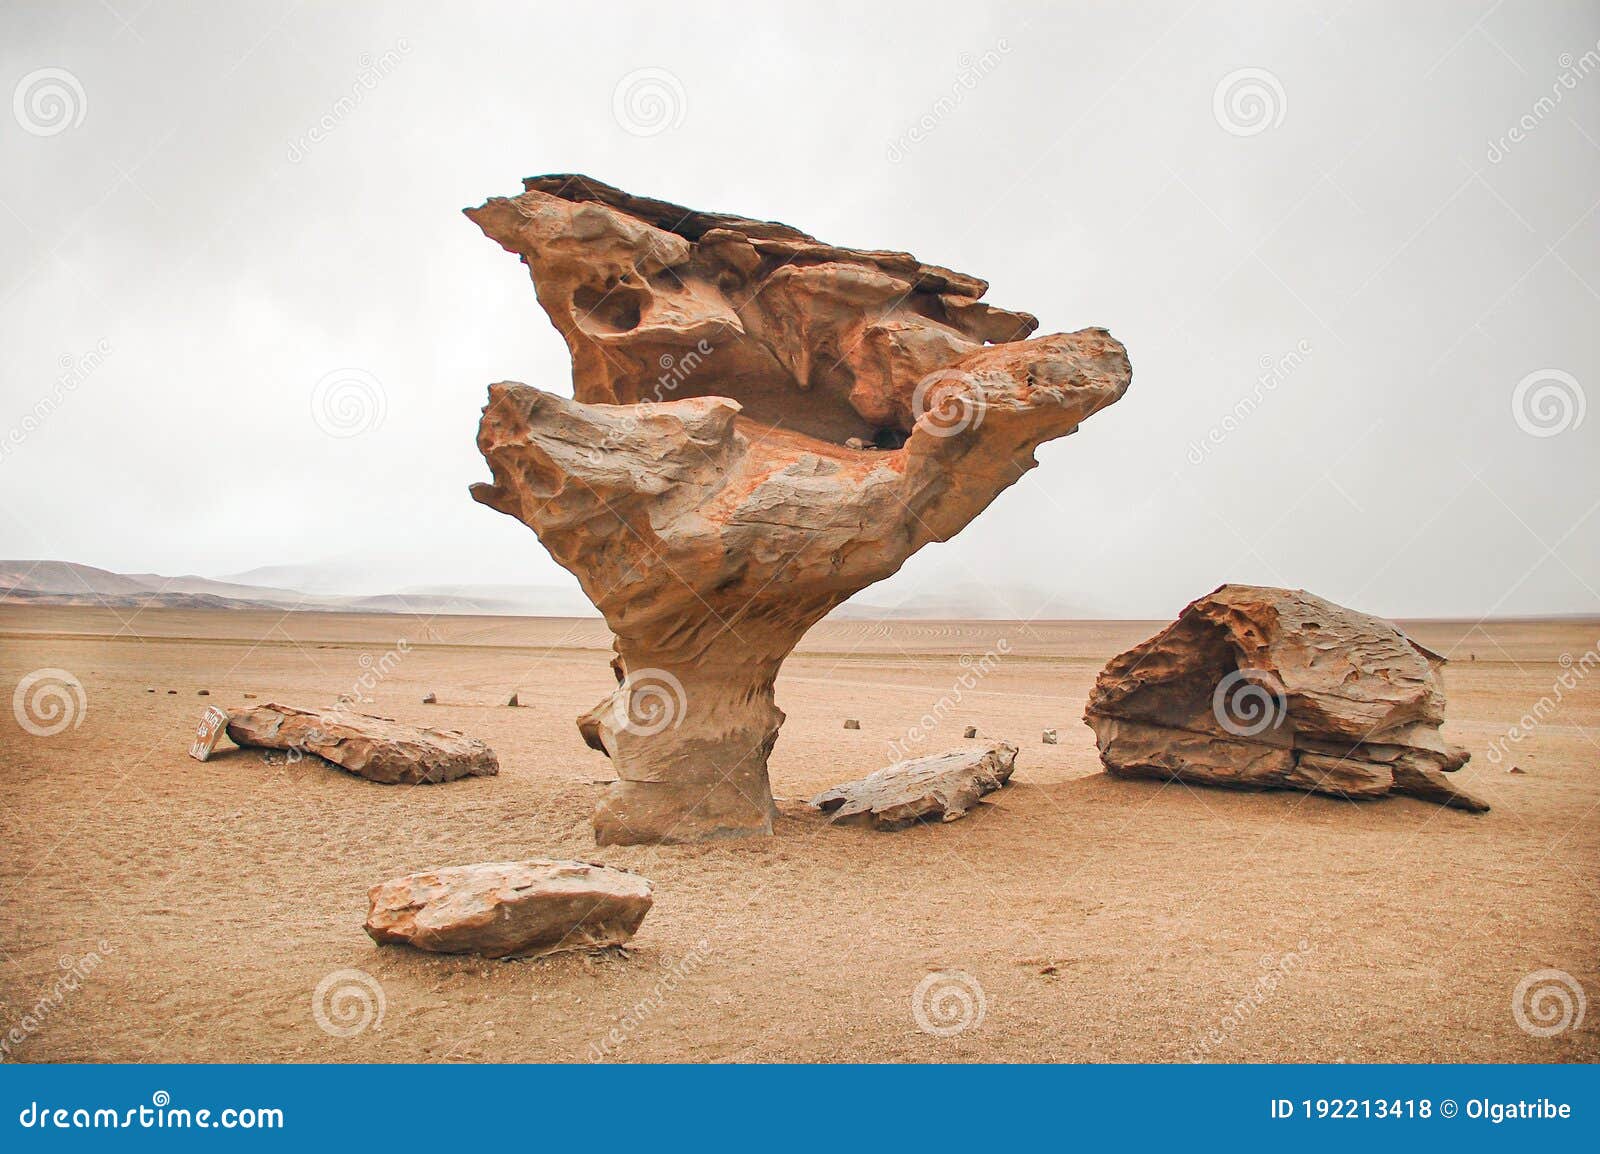 stone tree, rock formation of bolivia.